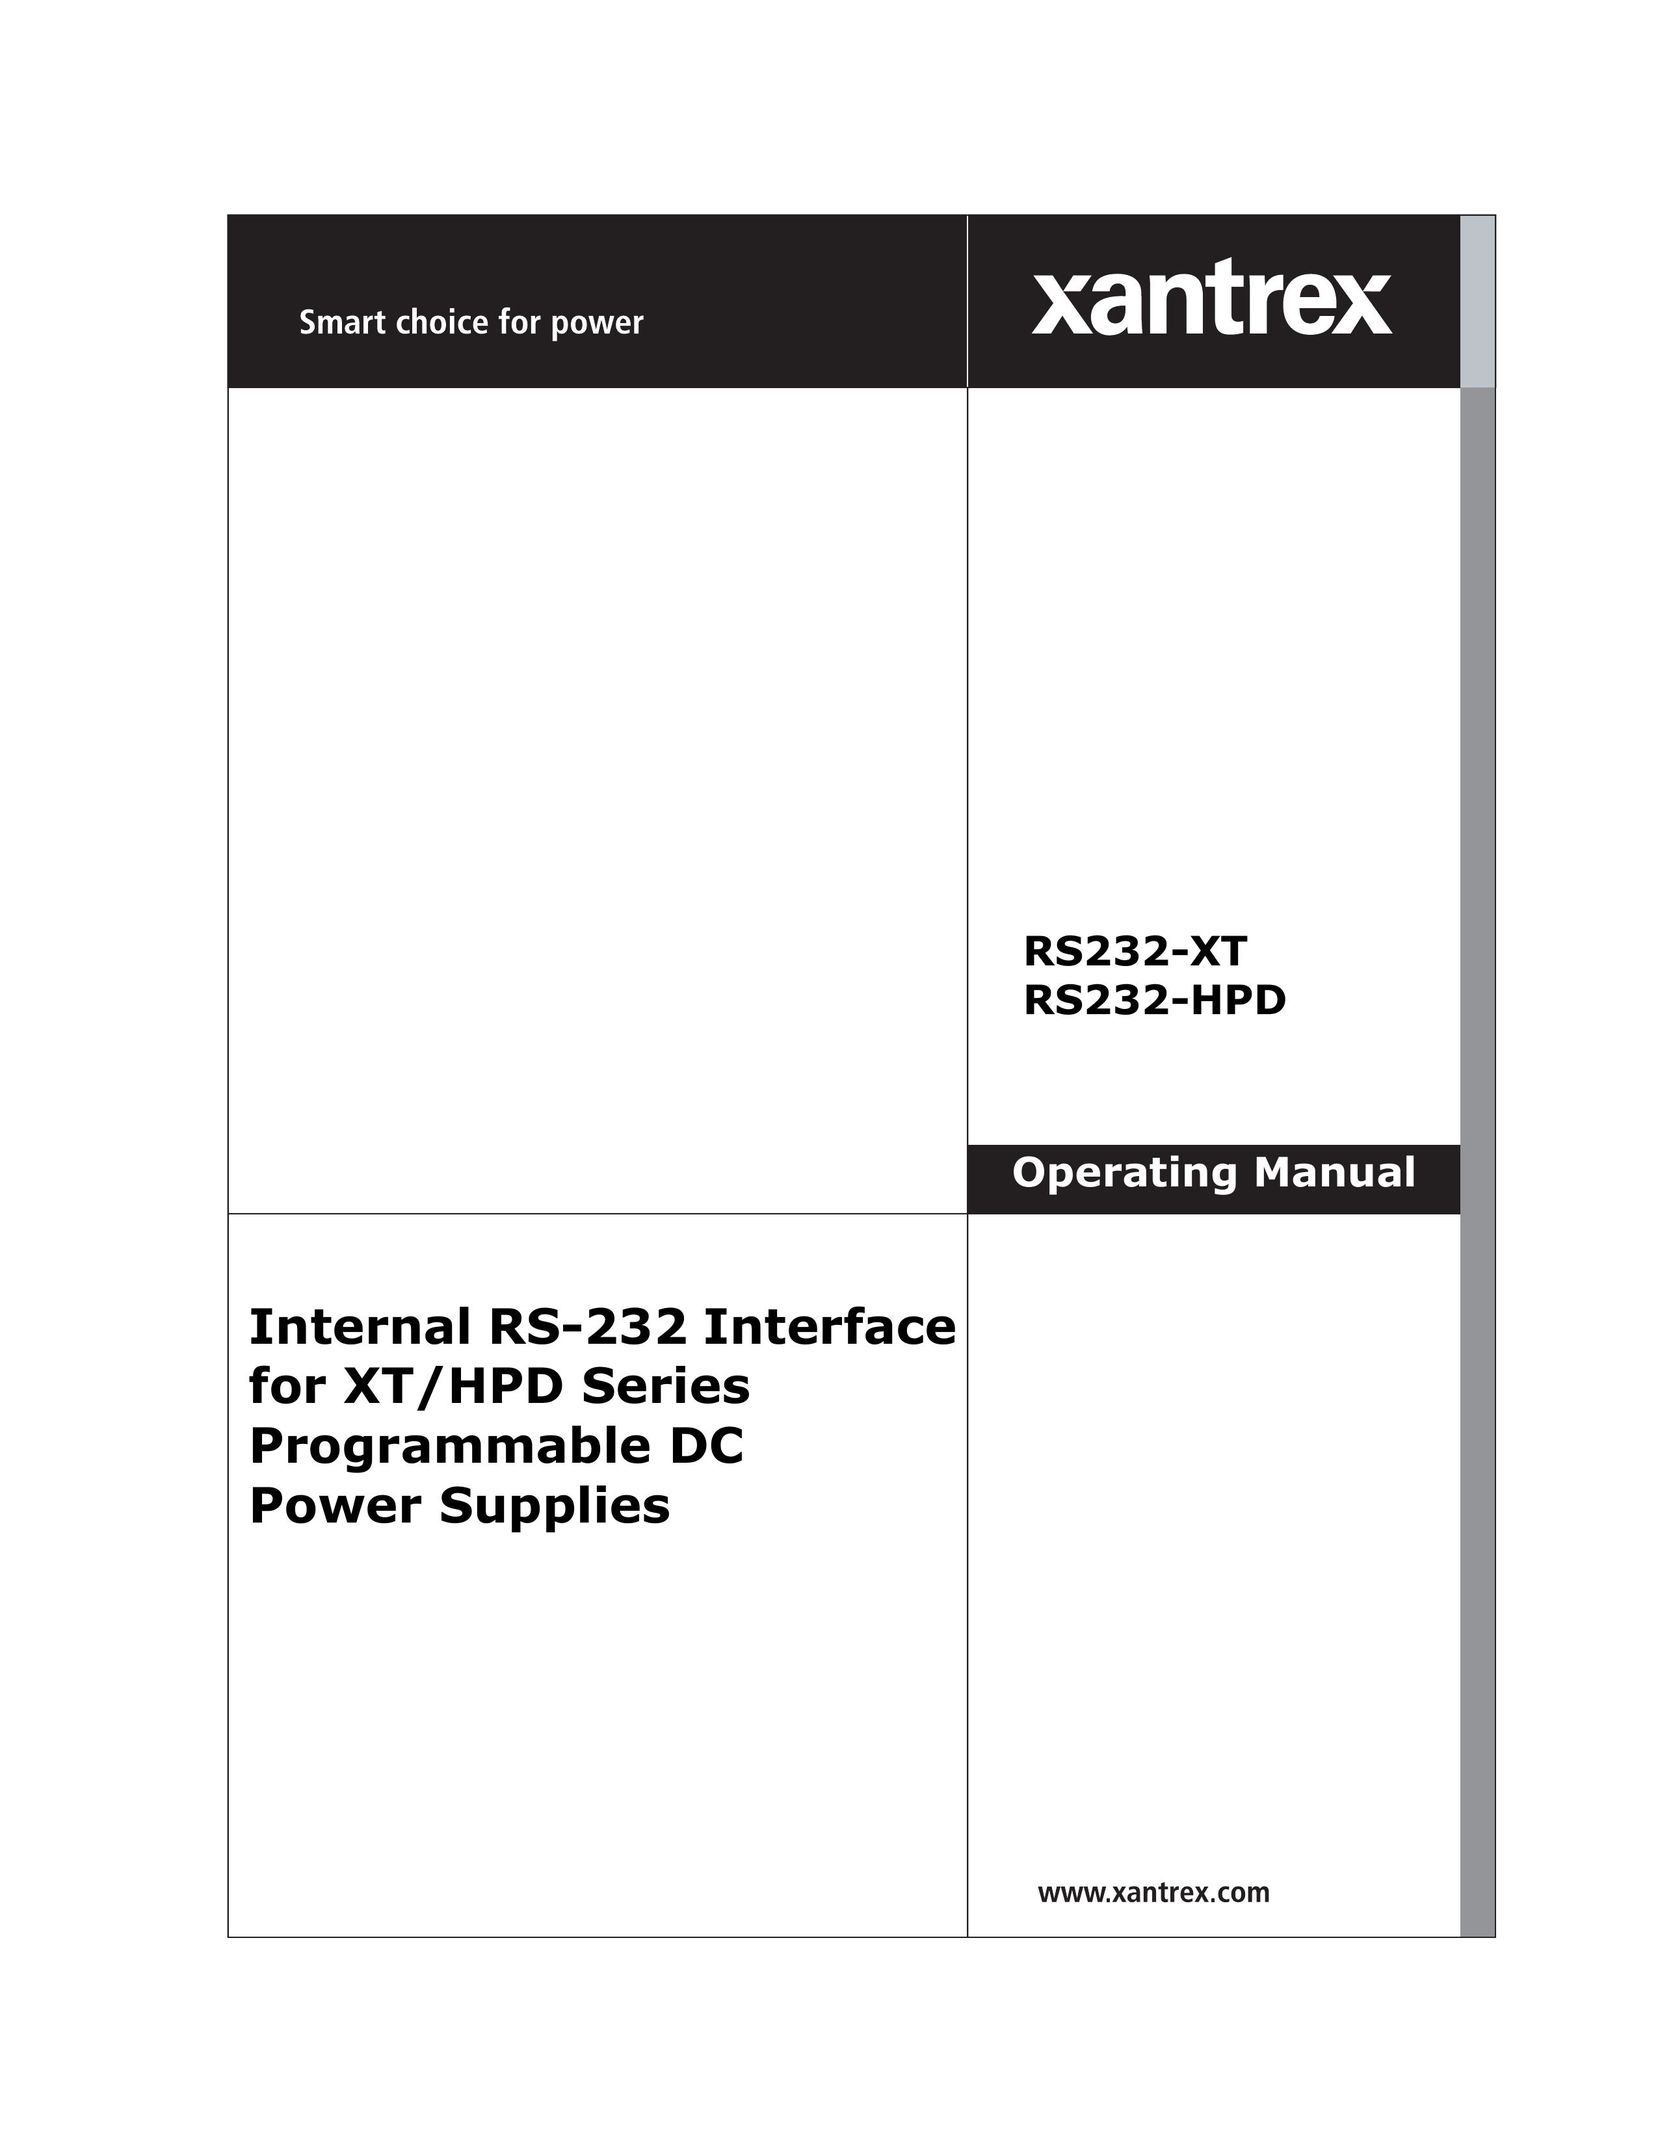 Xantrex Technology RS232-XT Power Supply User Manual